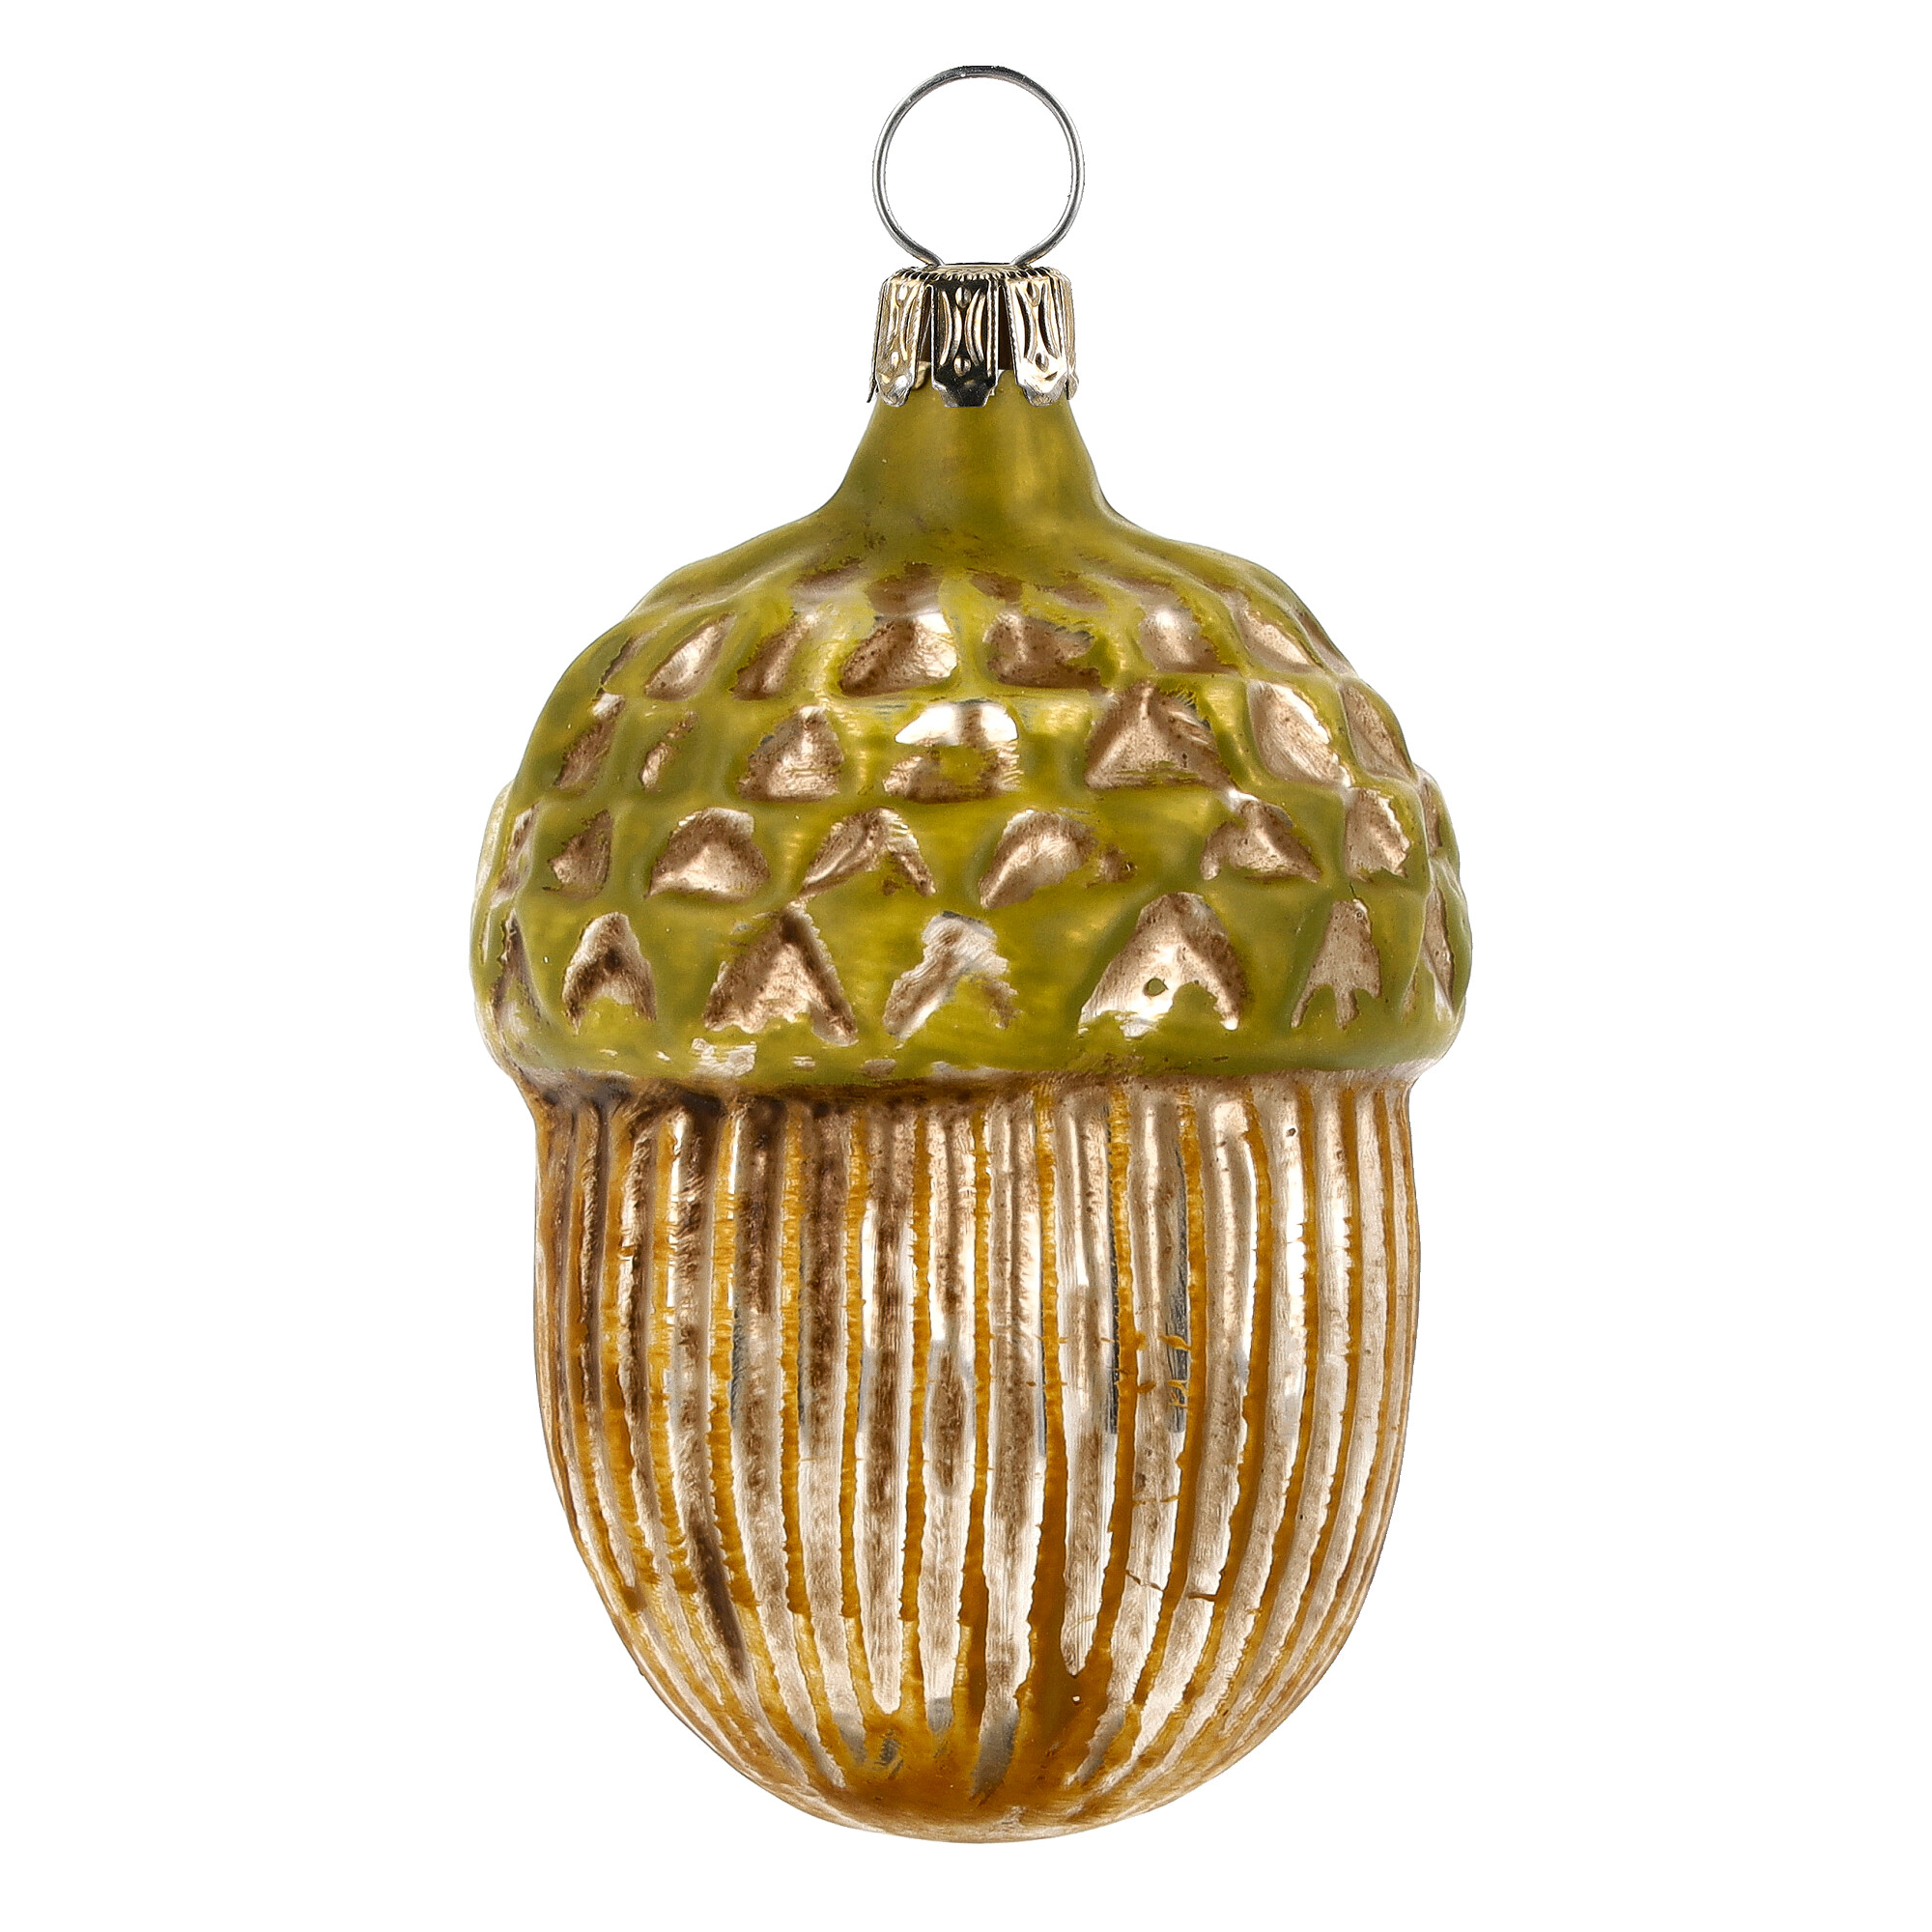 Retro Vintage style Christmas Glass Ornament - Acorn